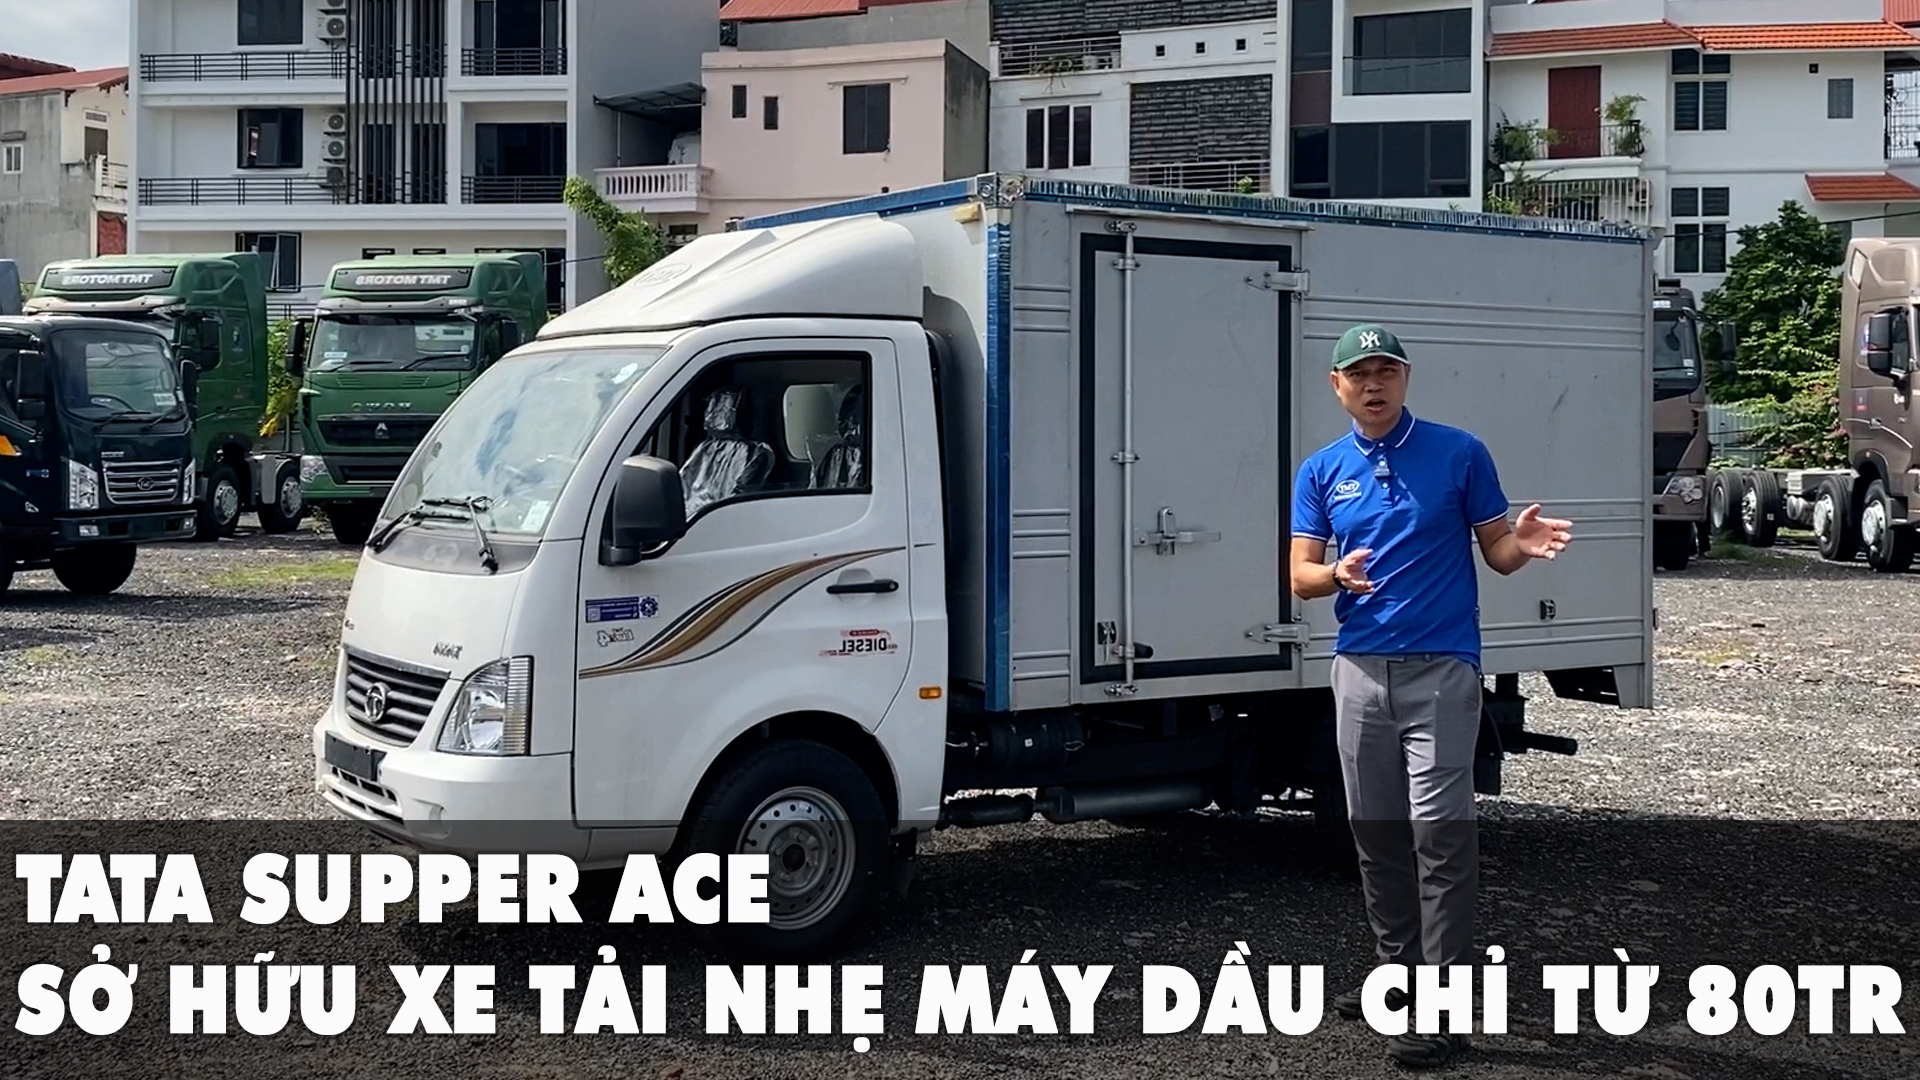 Hơn 200 triệu cho 1 chiếc xe tải nhẹ Tata Super Ace máy dầu.